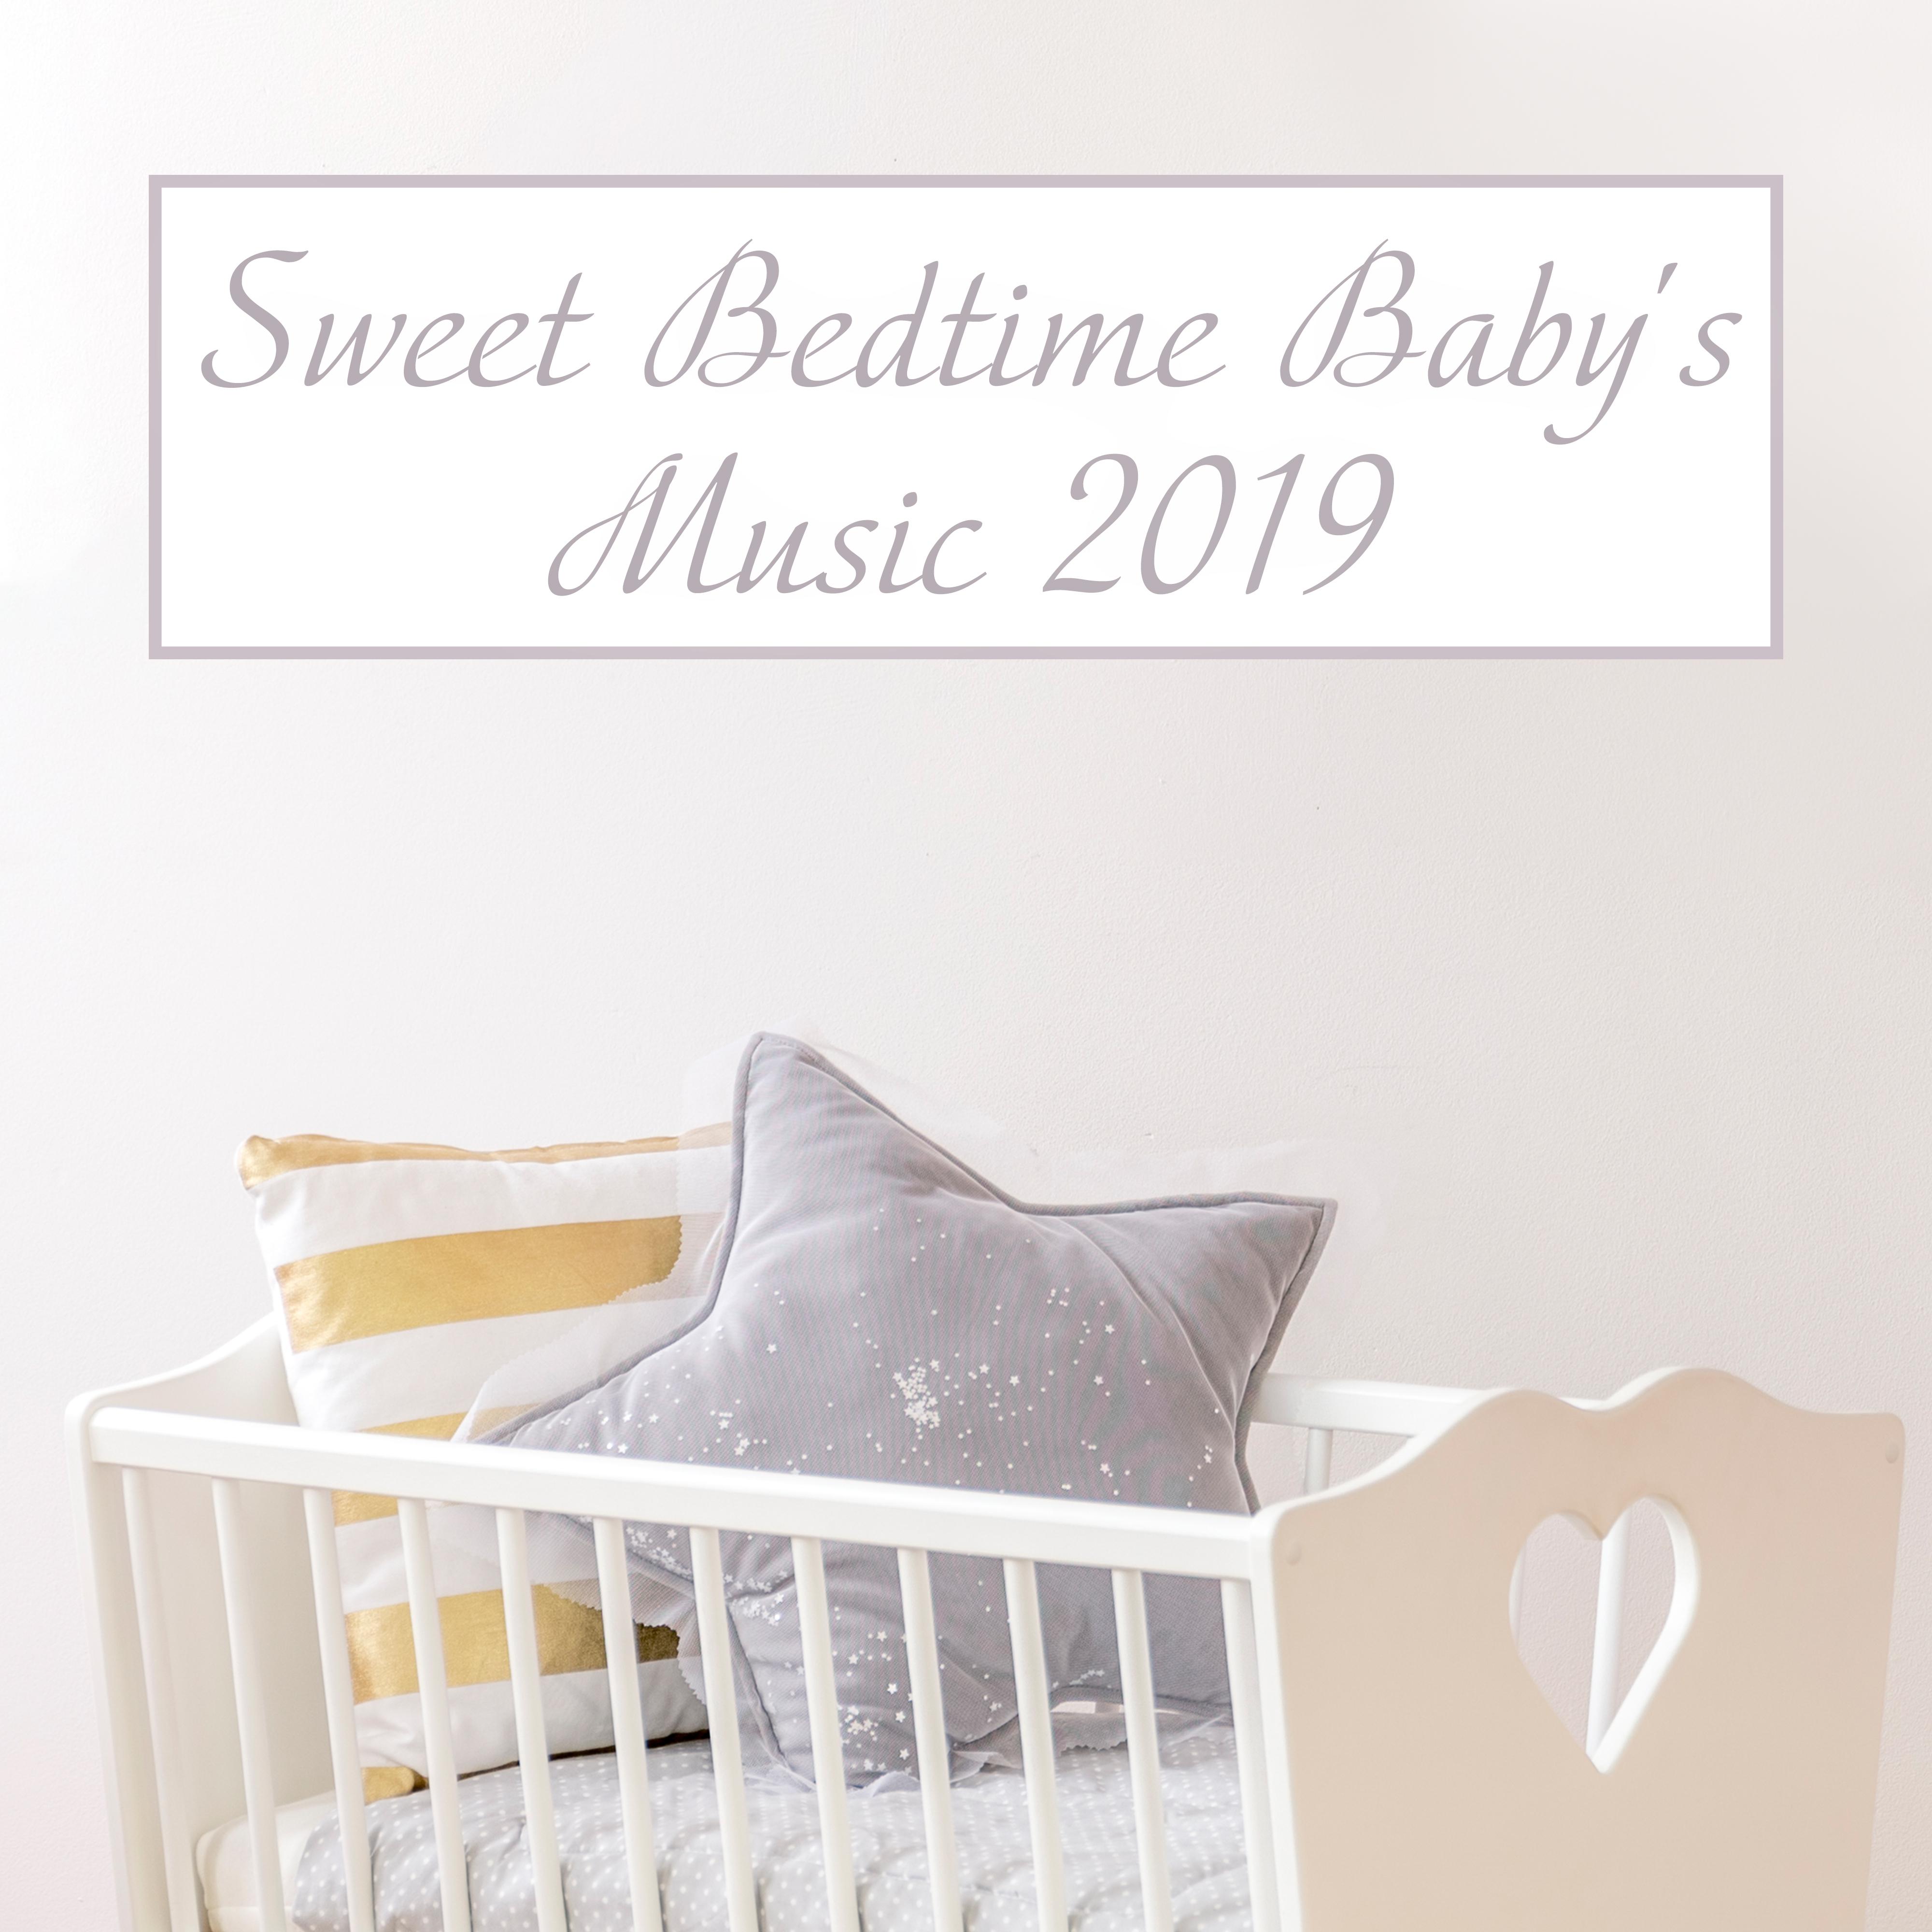 Sweet Bedtime Baby's Music 2019